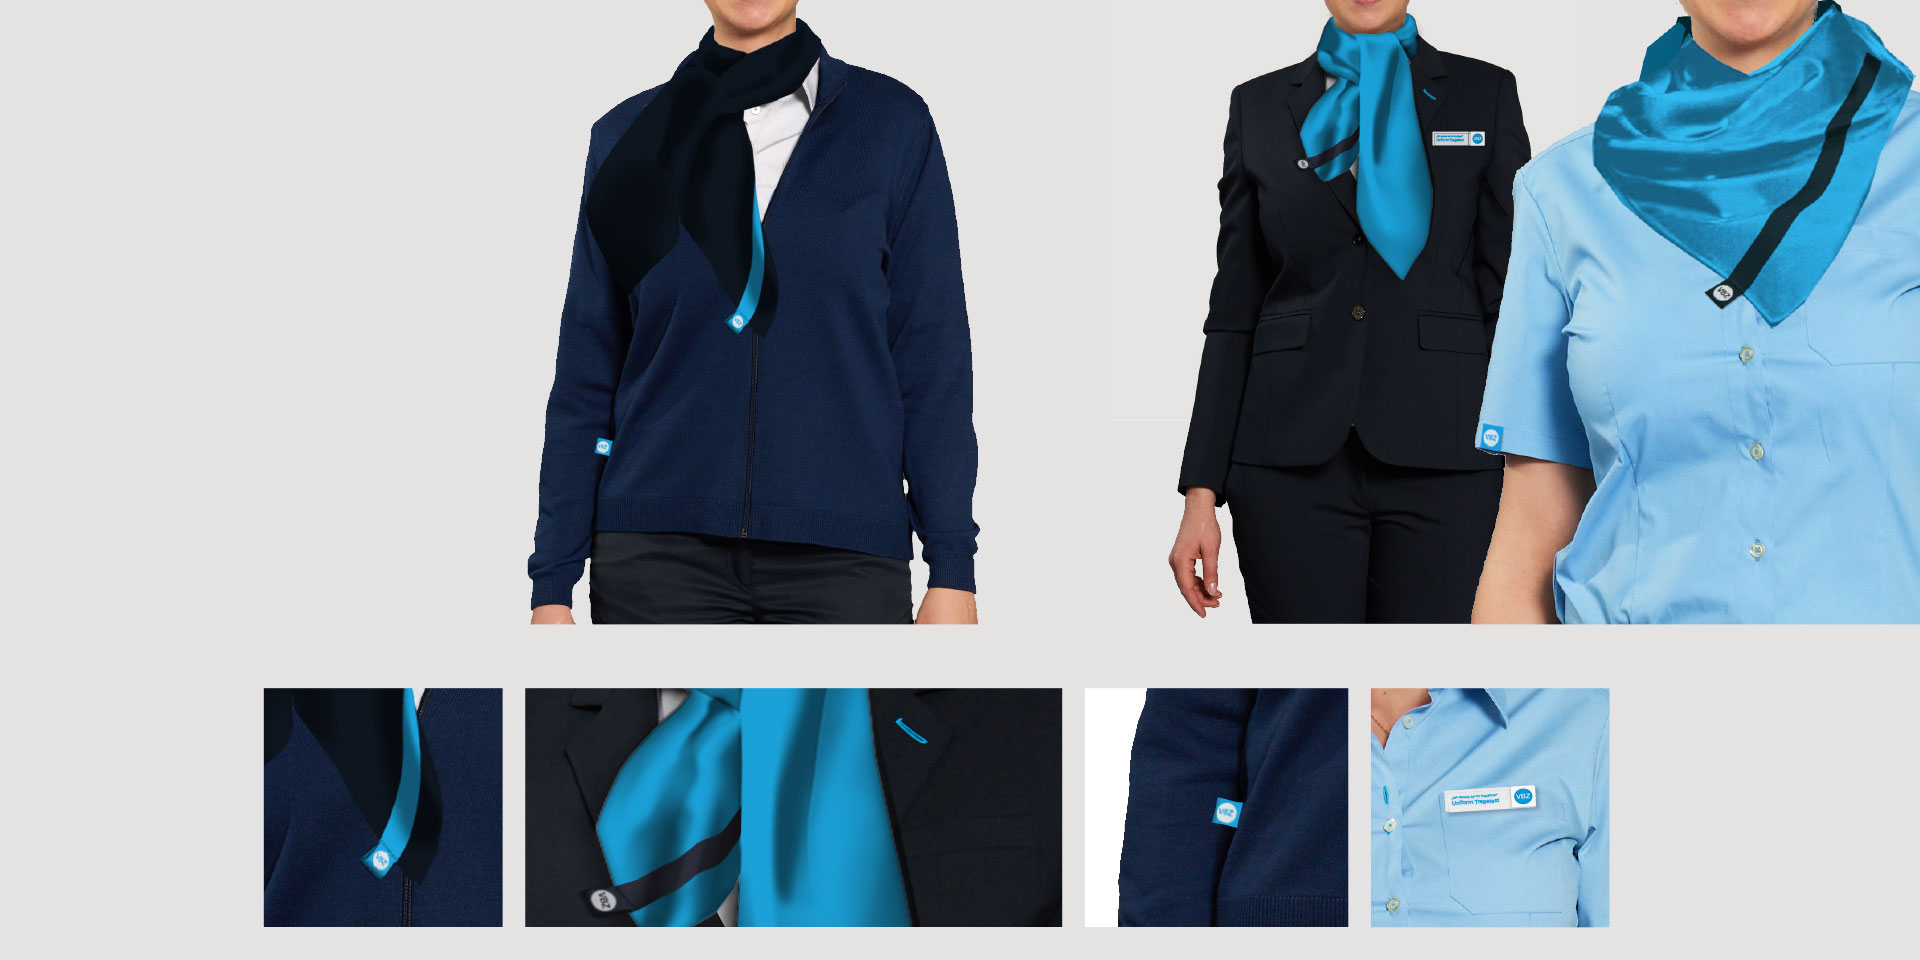 05 milani design consulting agency vbz corporate fashion textile transportation wear